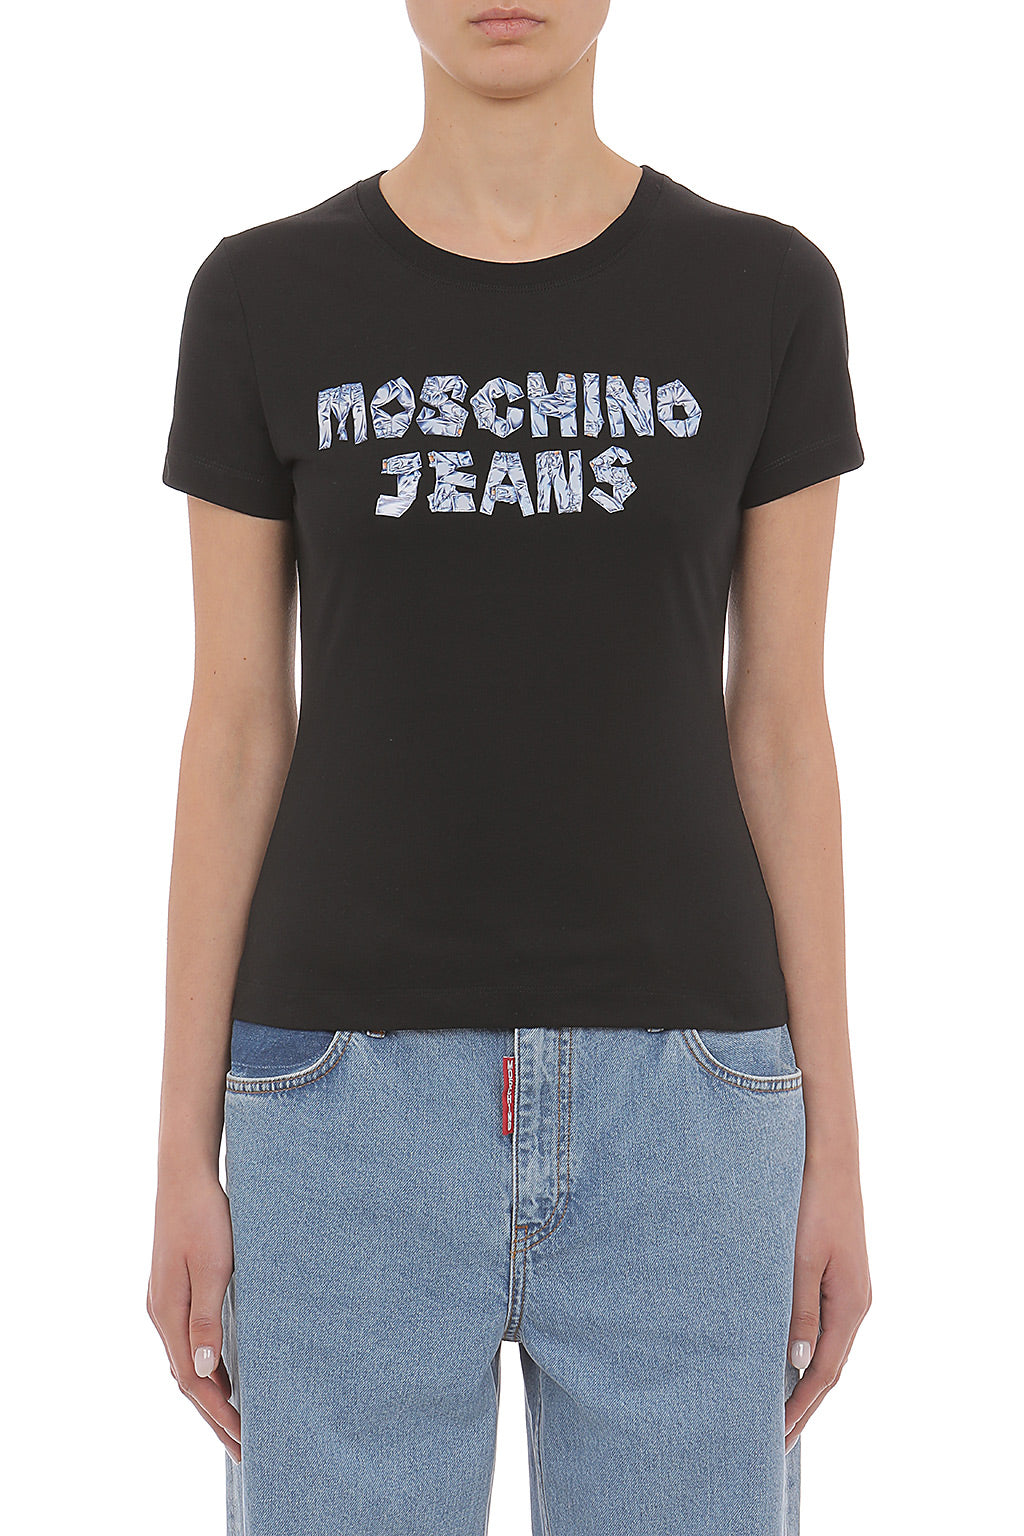 M05ch1n0 Jeans T-shirt Donna - 1